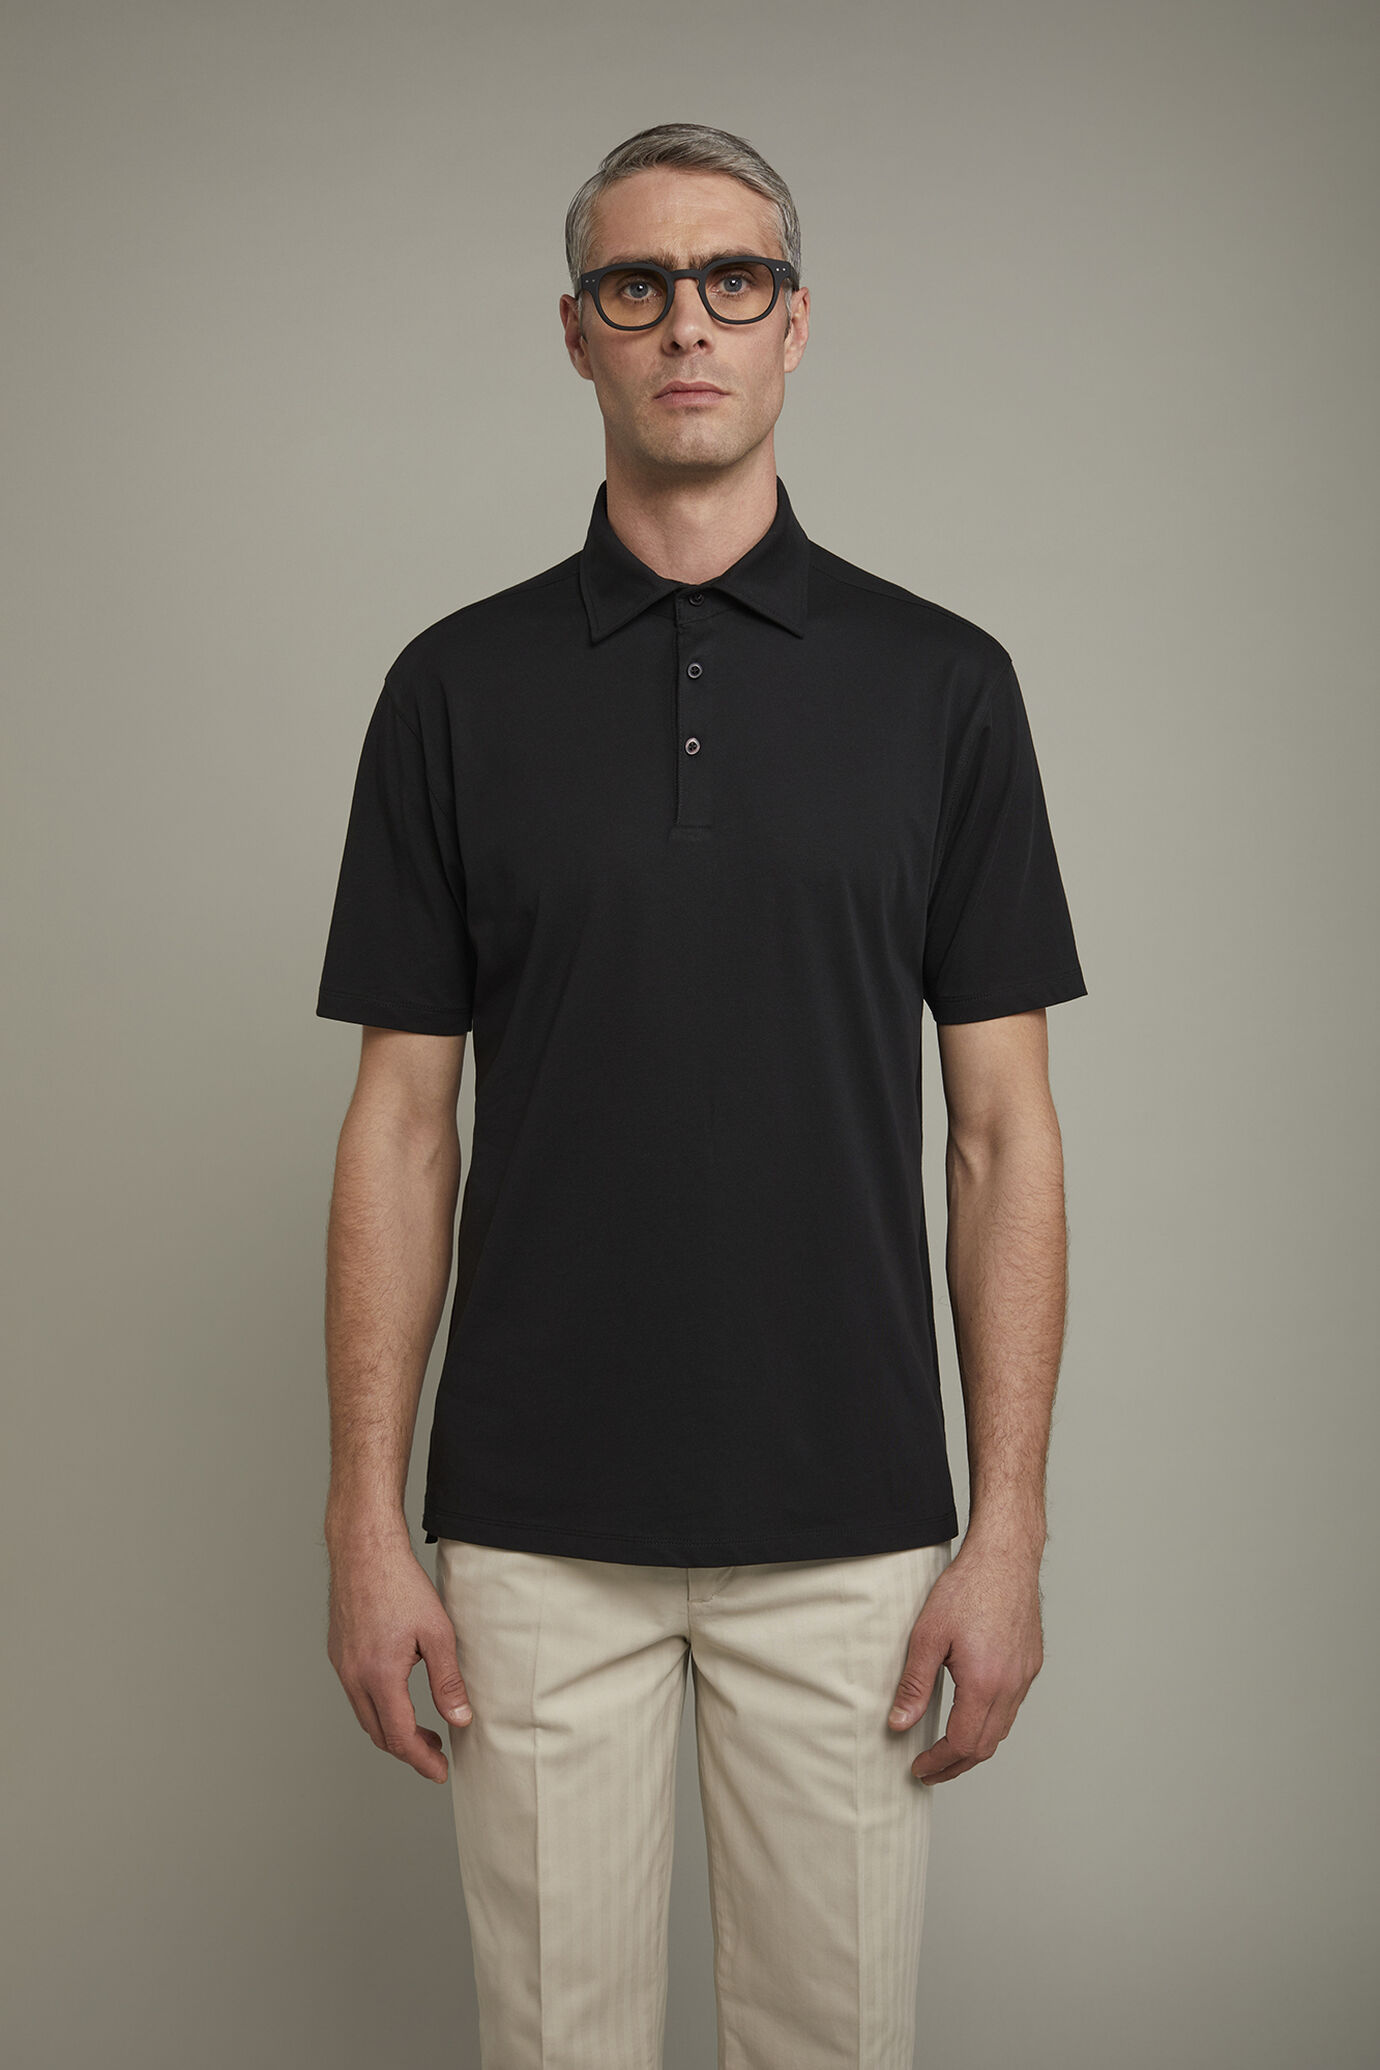 Men’s polo shirt short sleeves 100% supima cotton regular fit image number 2